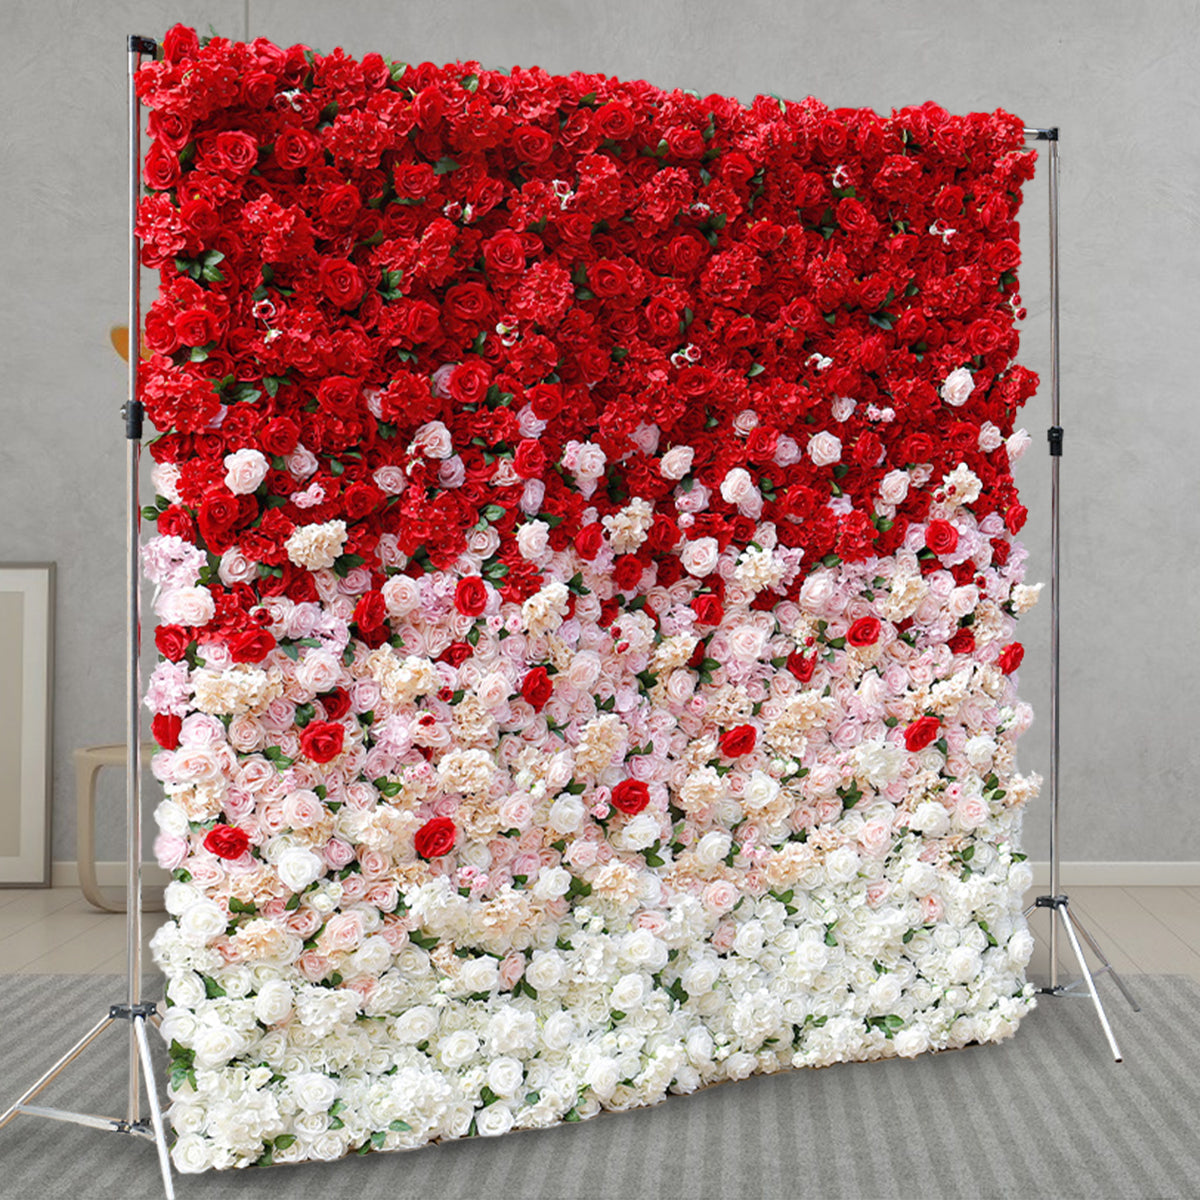 5D Artificial Flower Wall Arrangement Wedding Party Birthday Backdrop Decor HQ9006